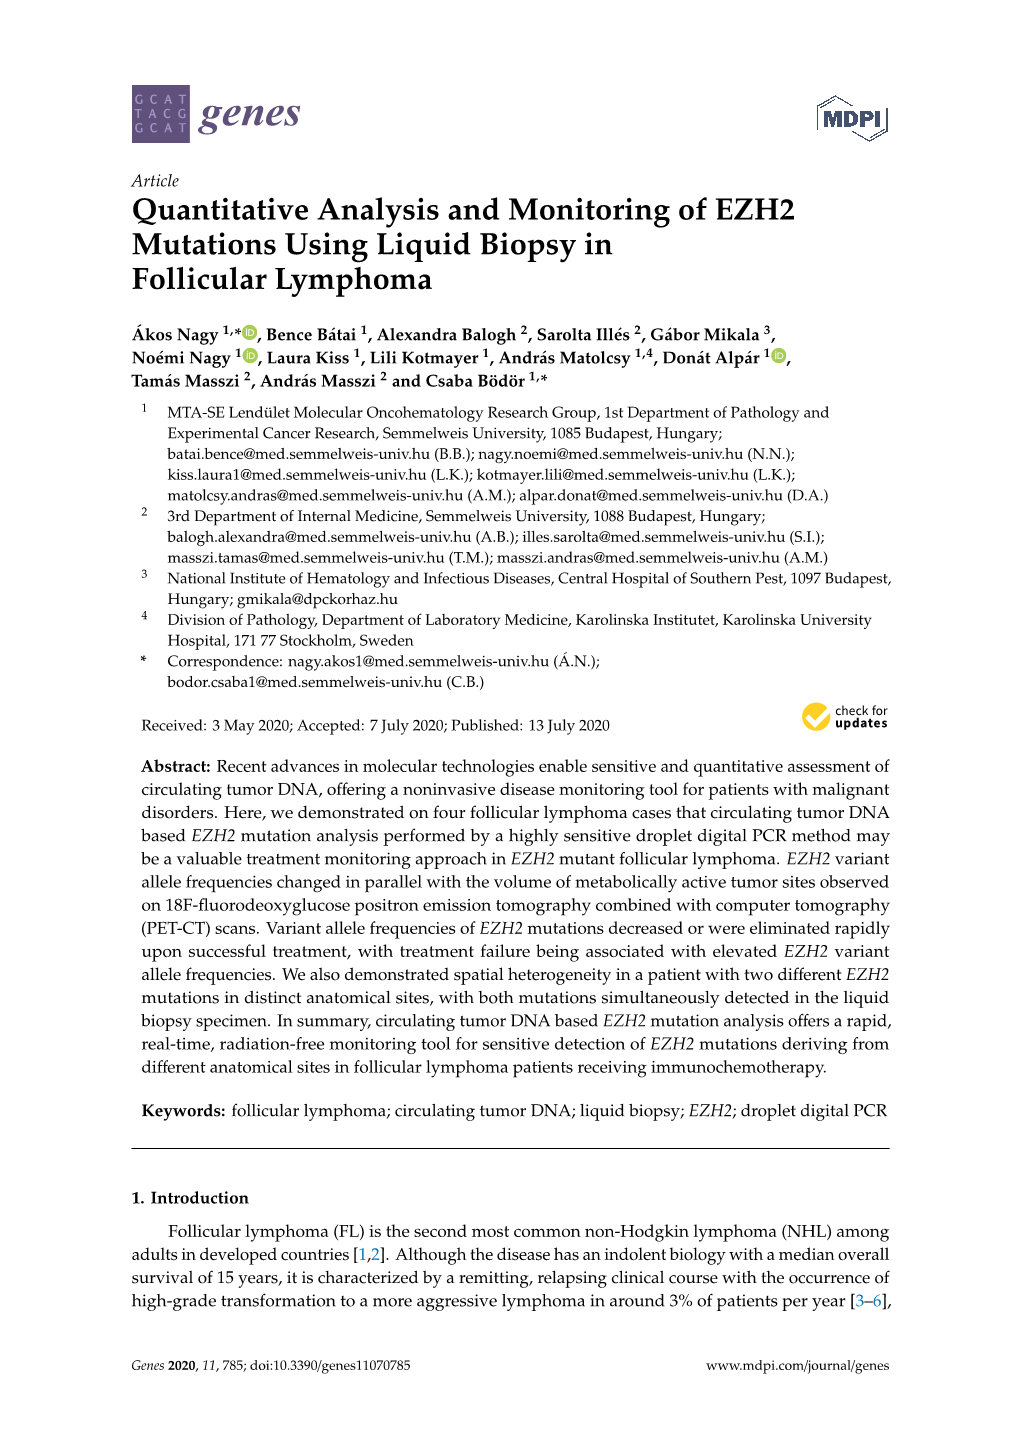 Quantitative Analysis and Monitoring of EZH2 Mutations Using Liquid Biopsy in Follicular Lymphoma